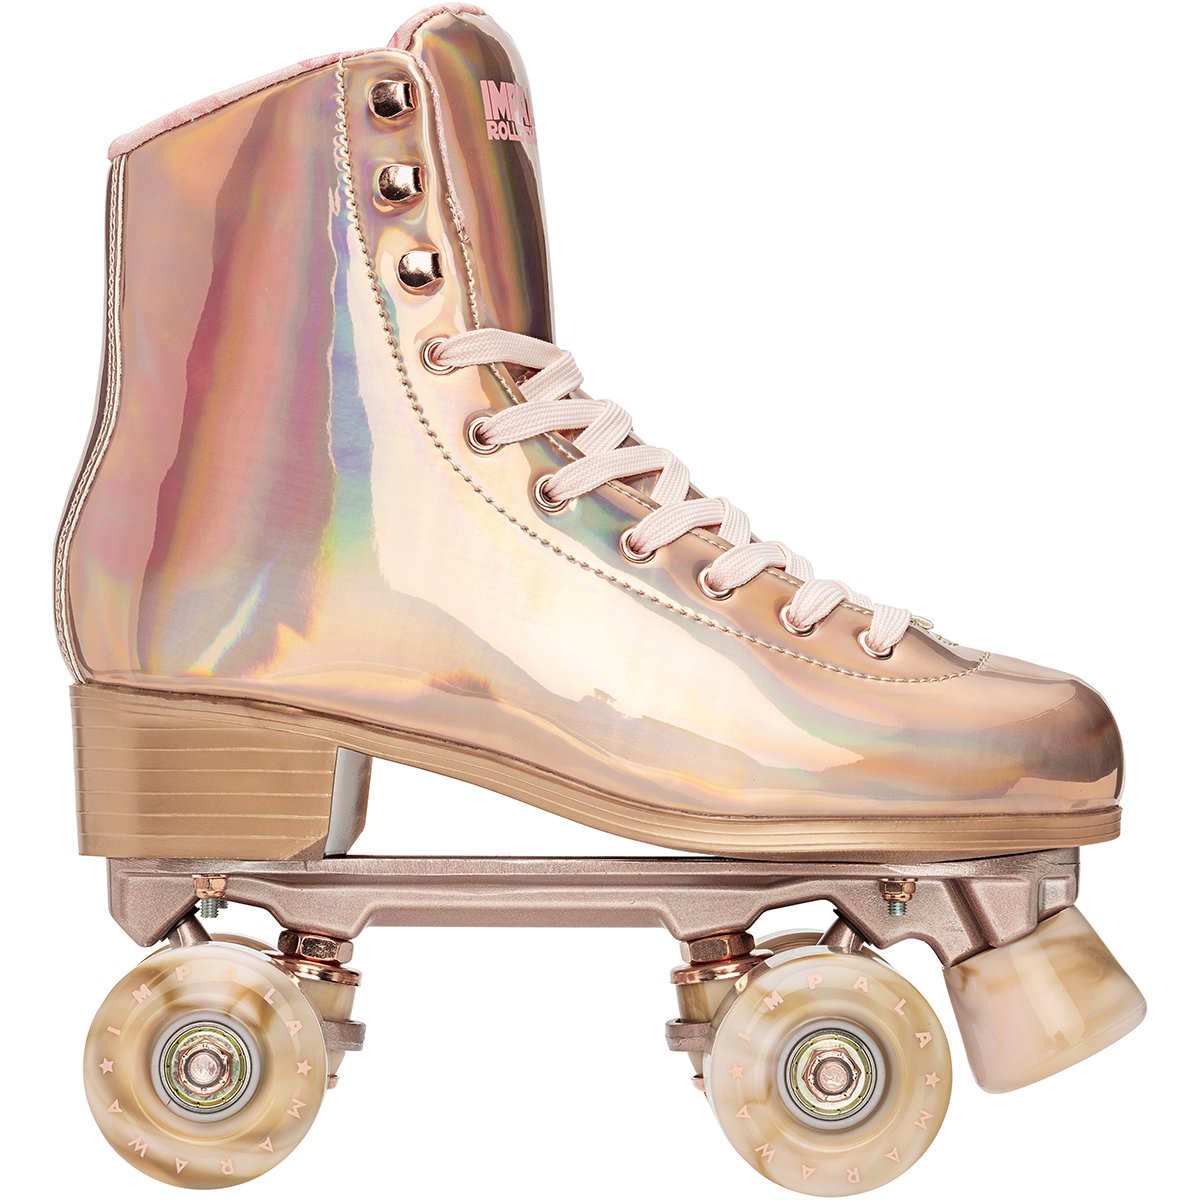 Impala Roller Skate Marawa - Doberman's Skate Shop - Doberman's Skate Shop